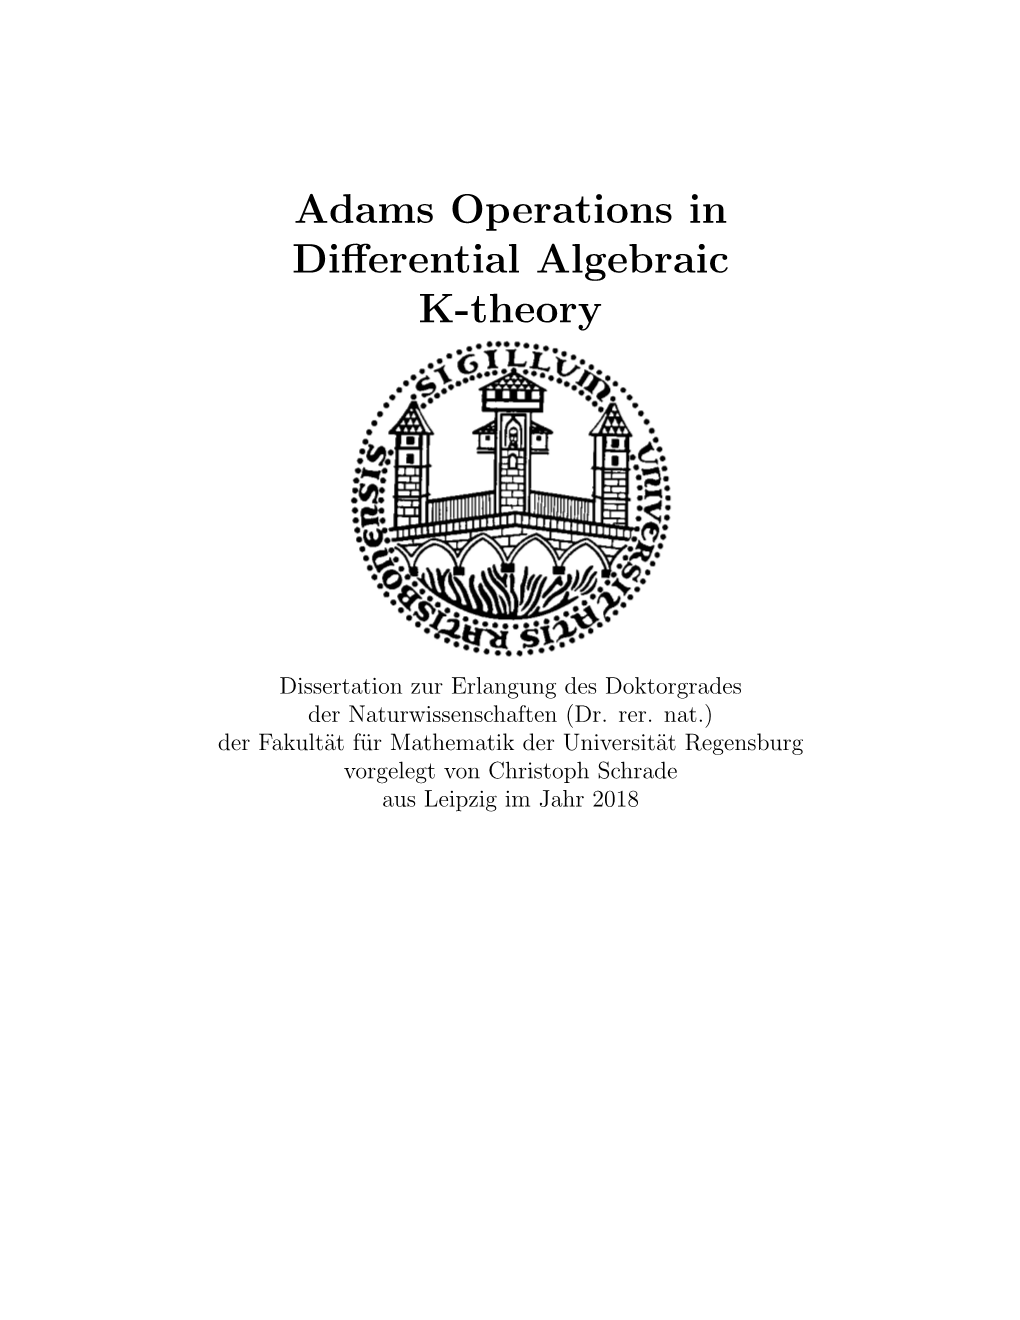 Adams Operations in Differential Algebraic K-Theory